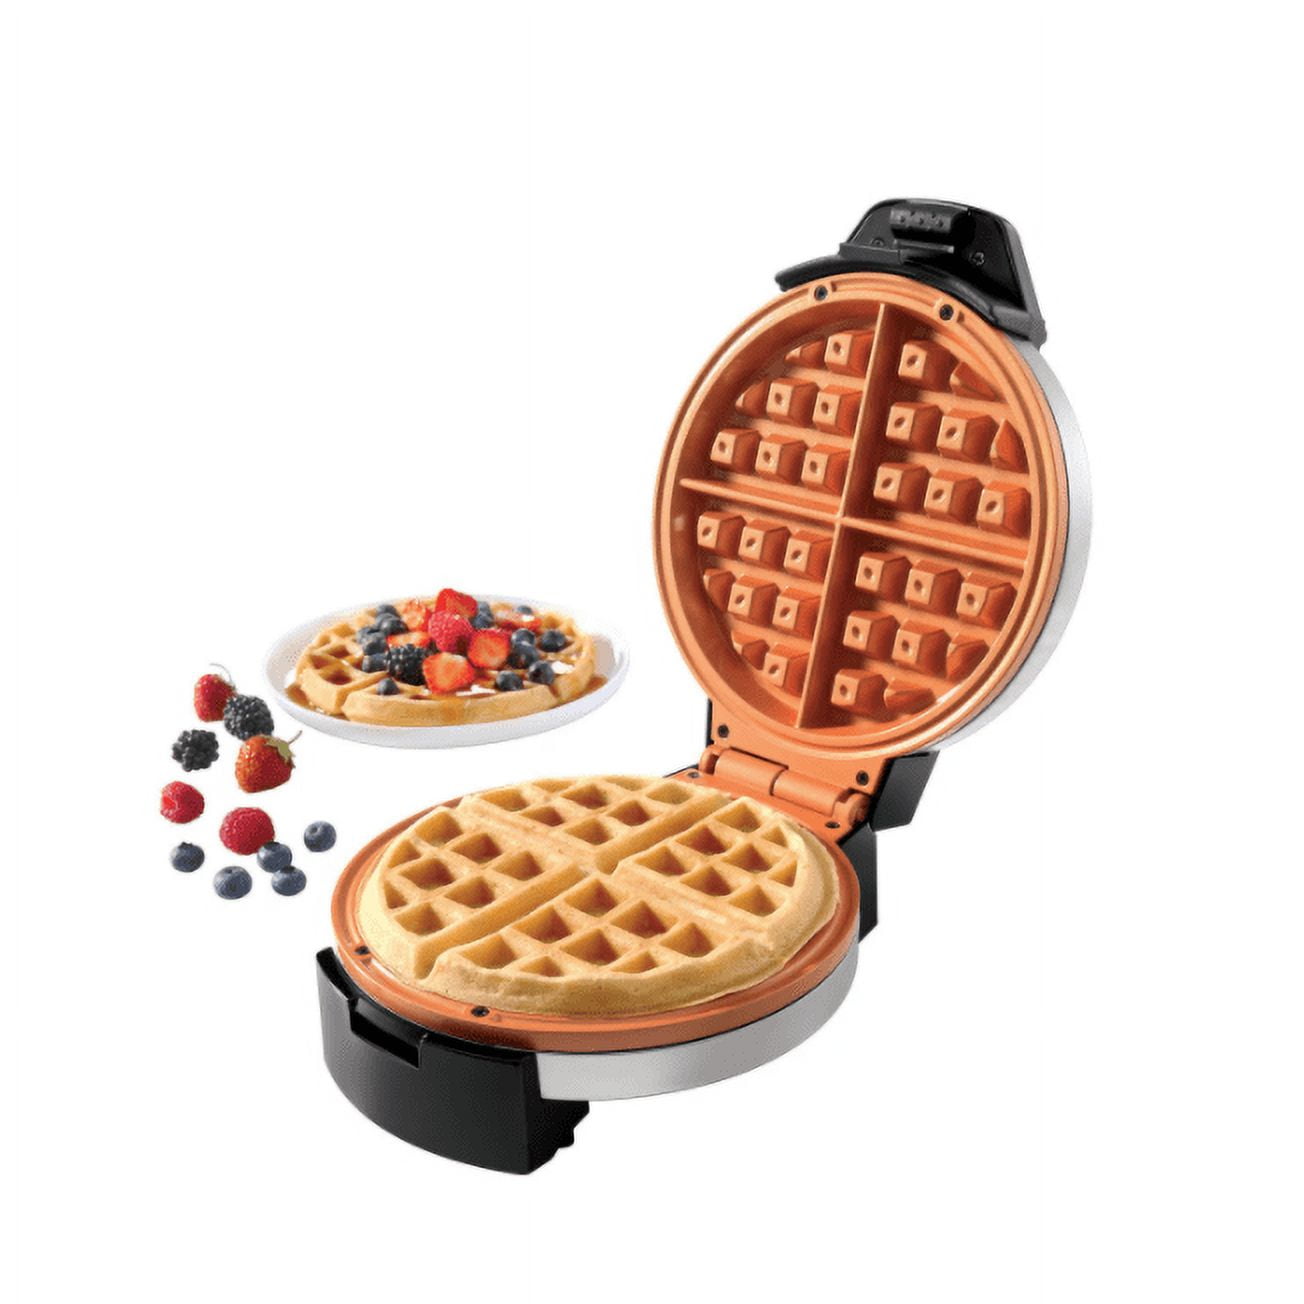 Mainstays Single Waffle Maker, Matte Black, Model Ms33017961034